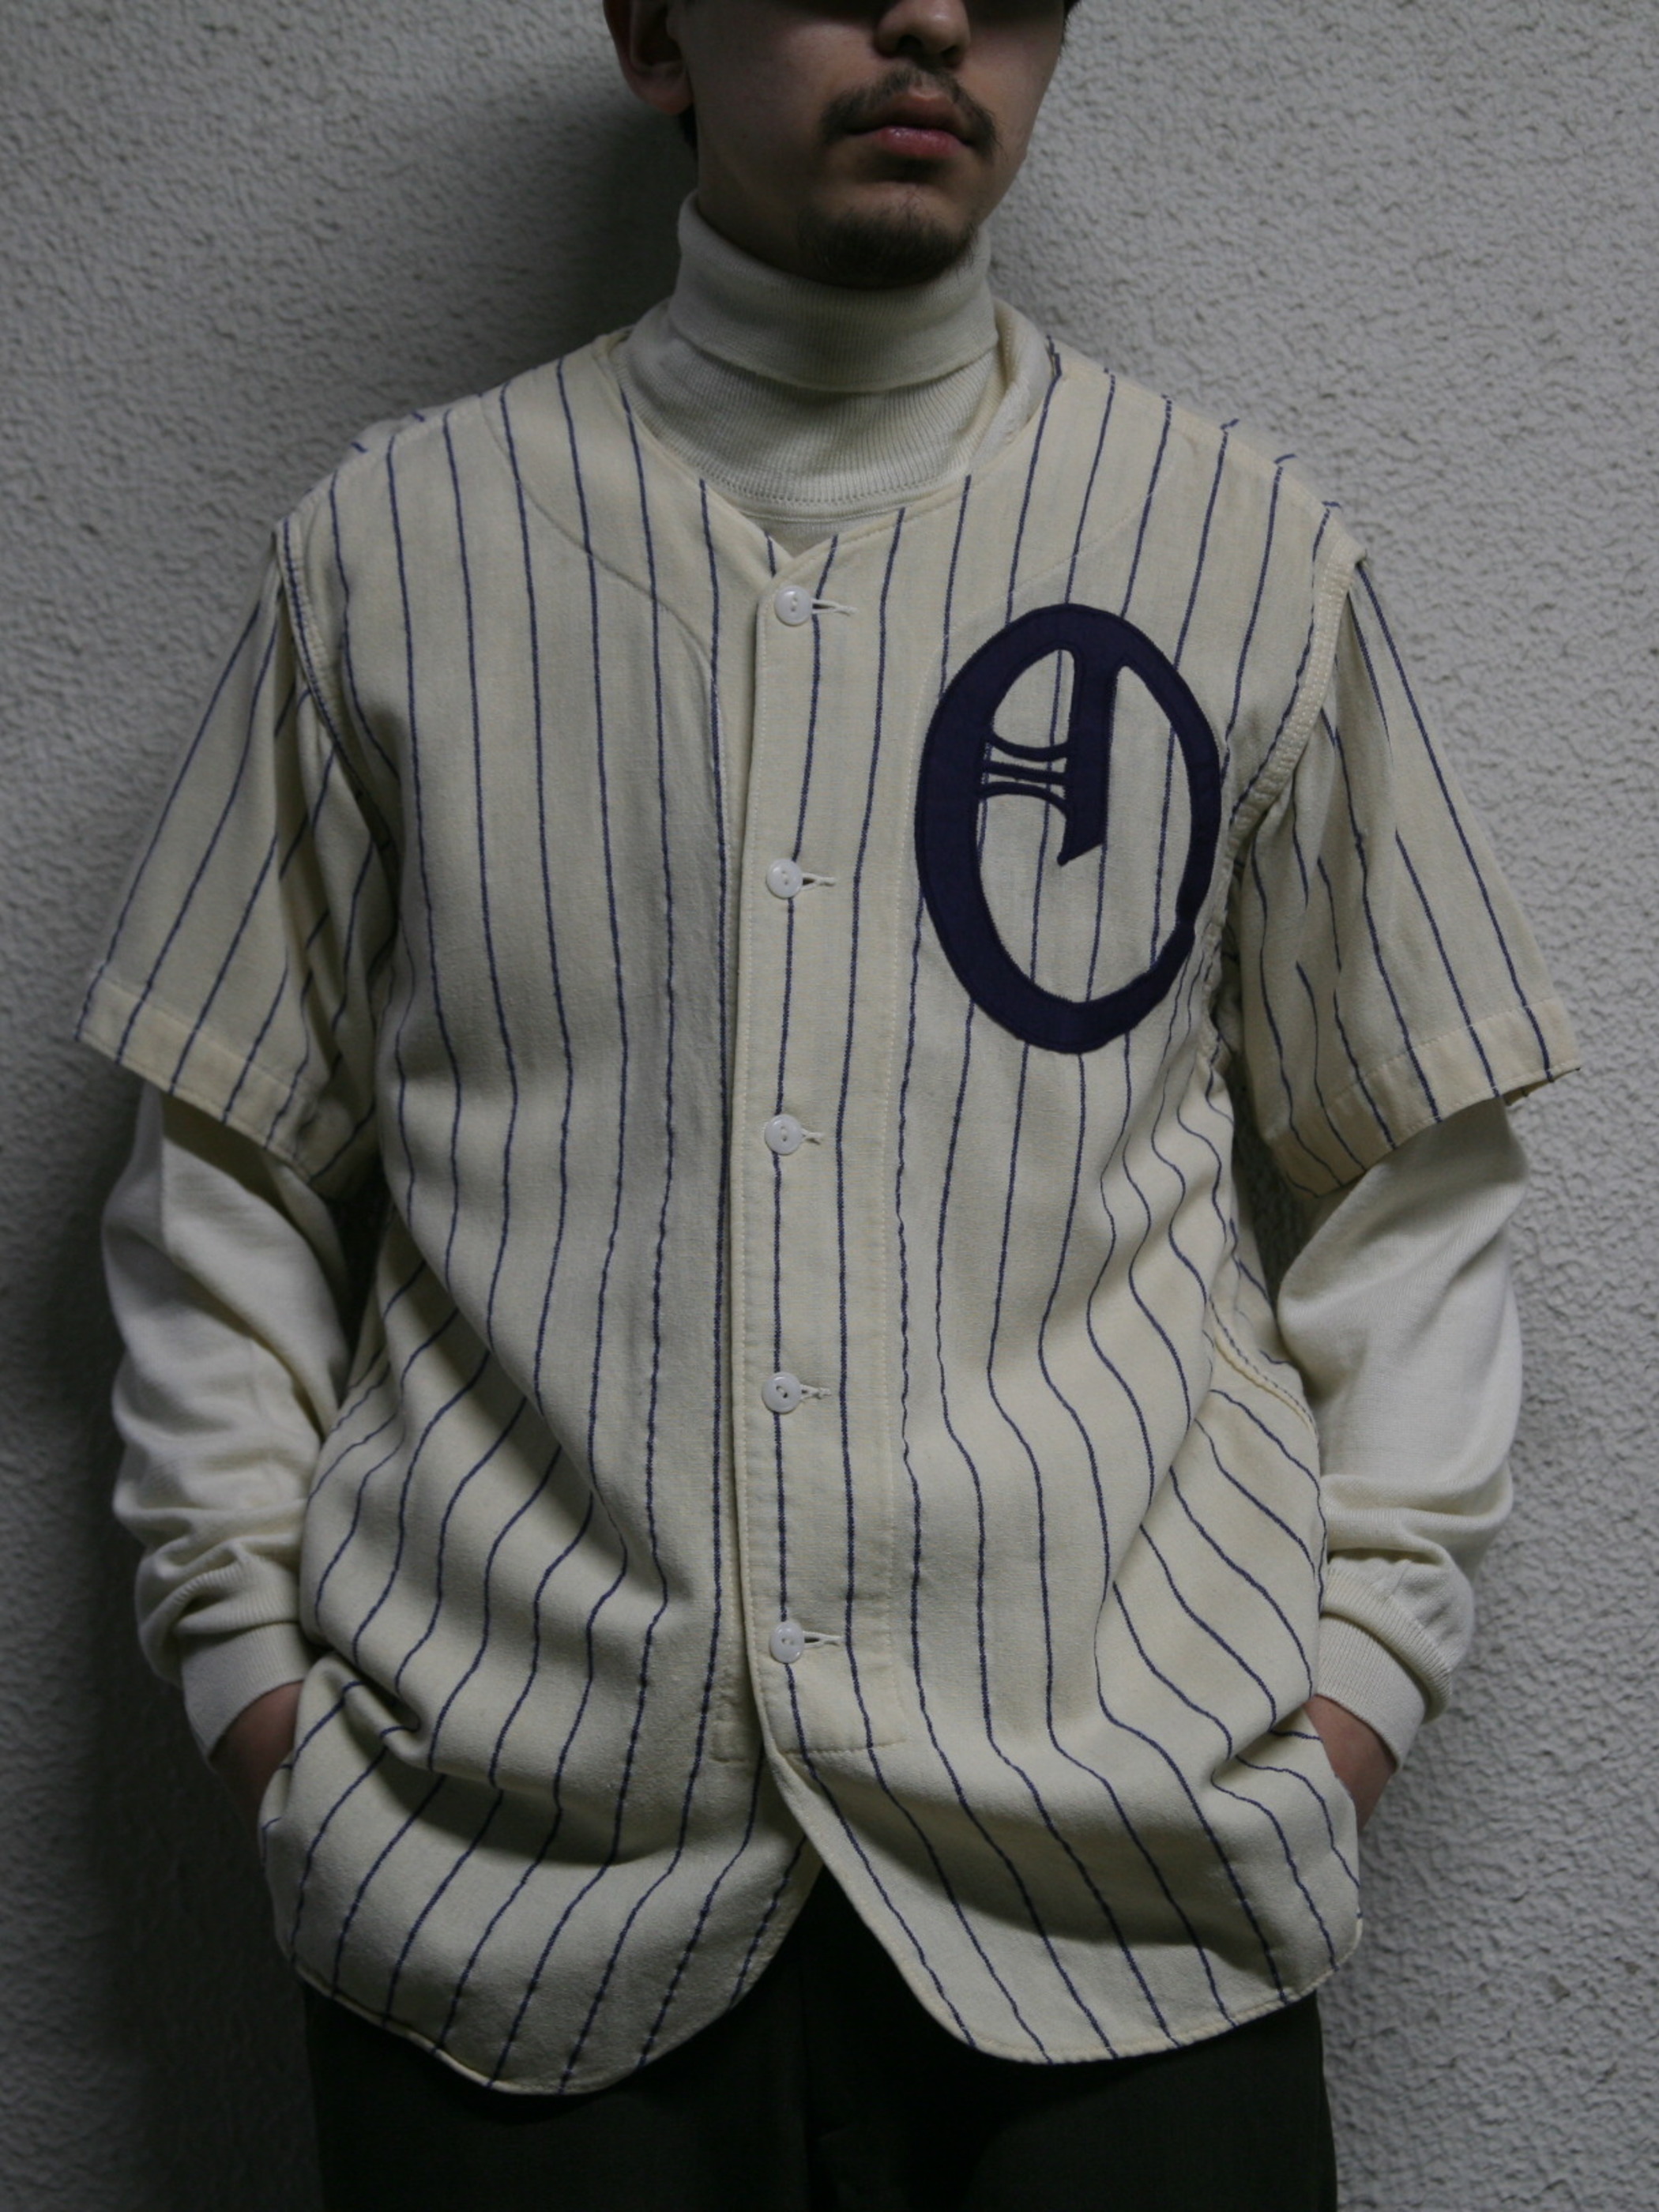 1950s "RED FOV MANUFACTURING Co." s/s wool baseball shirt -ECRU-